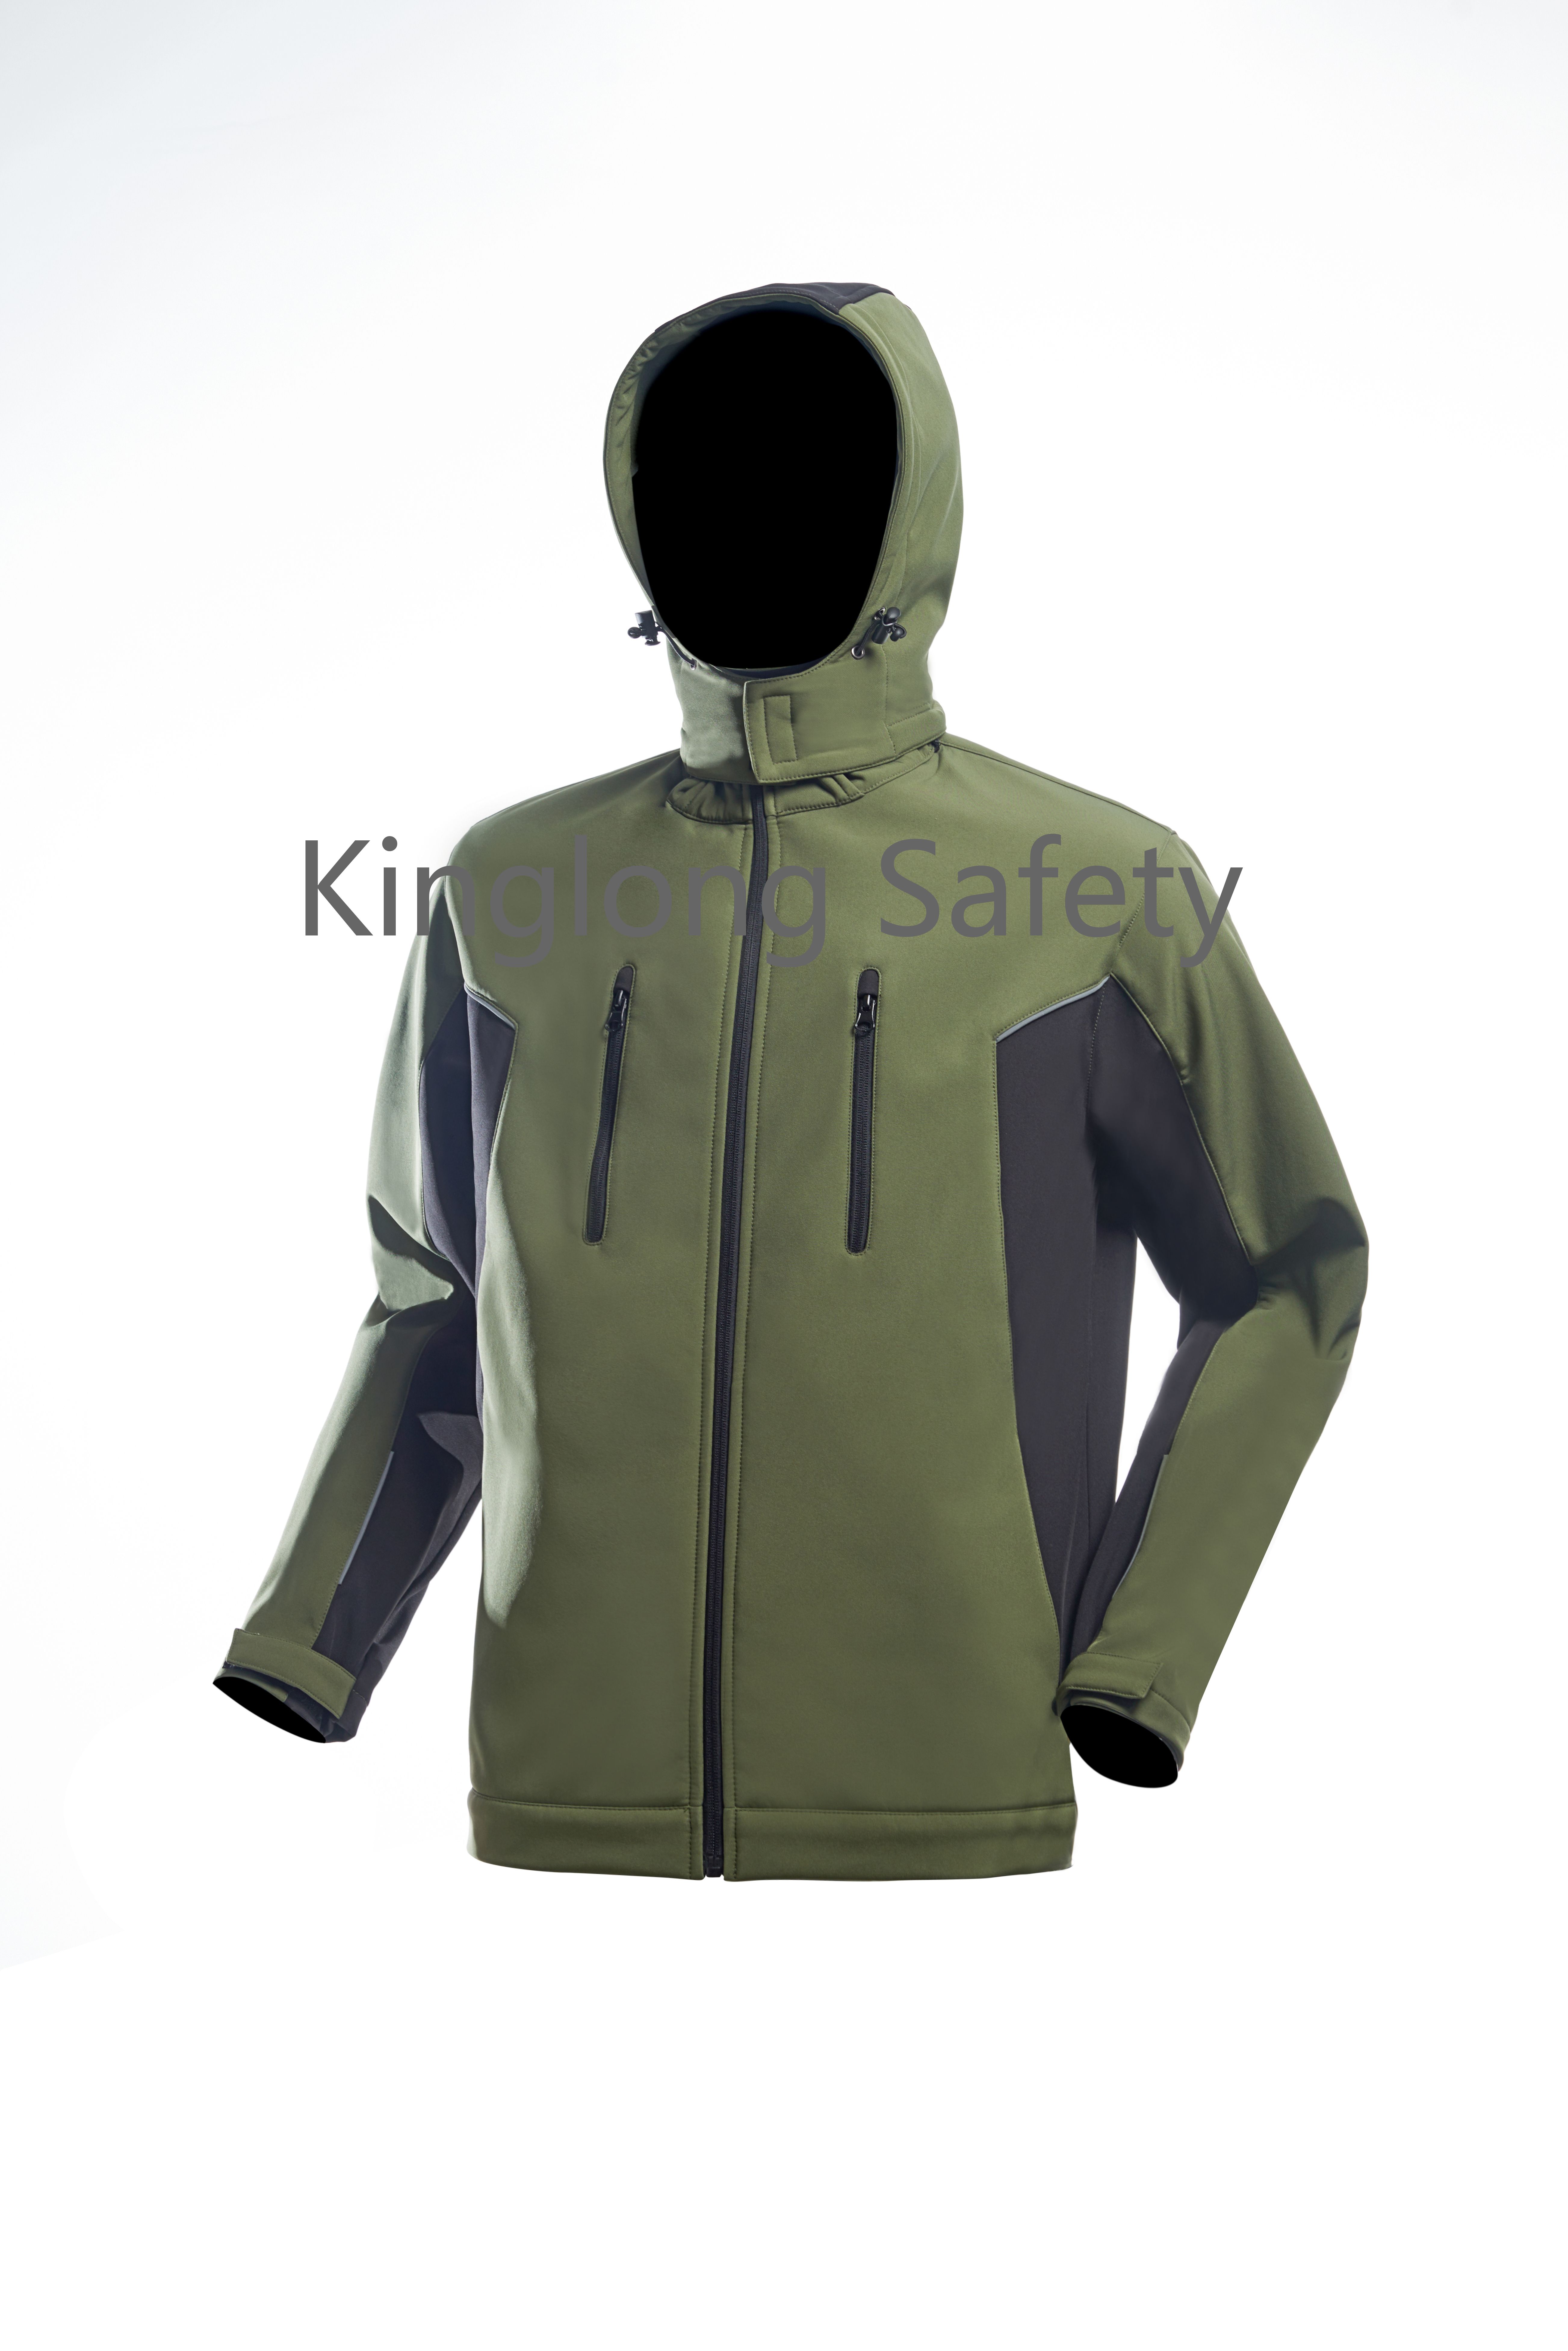 Wholesale mens fashion work jackets mens outdoor softshell jackets jogging hoodies